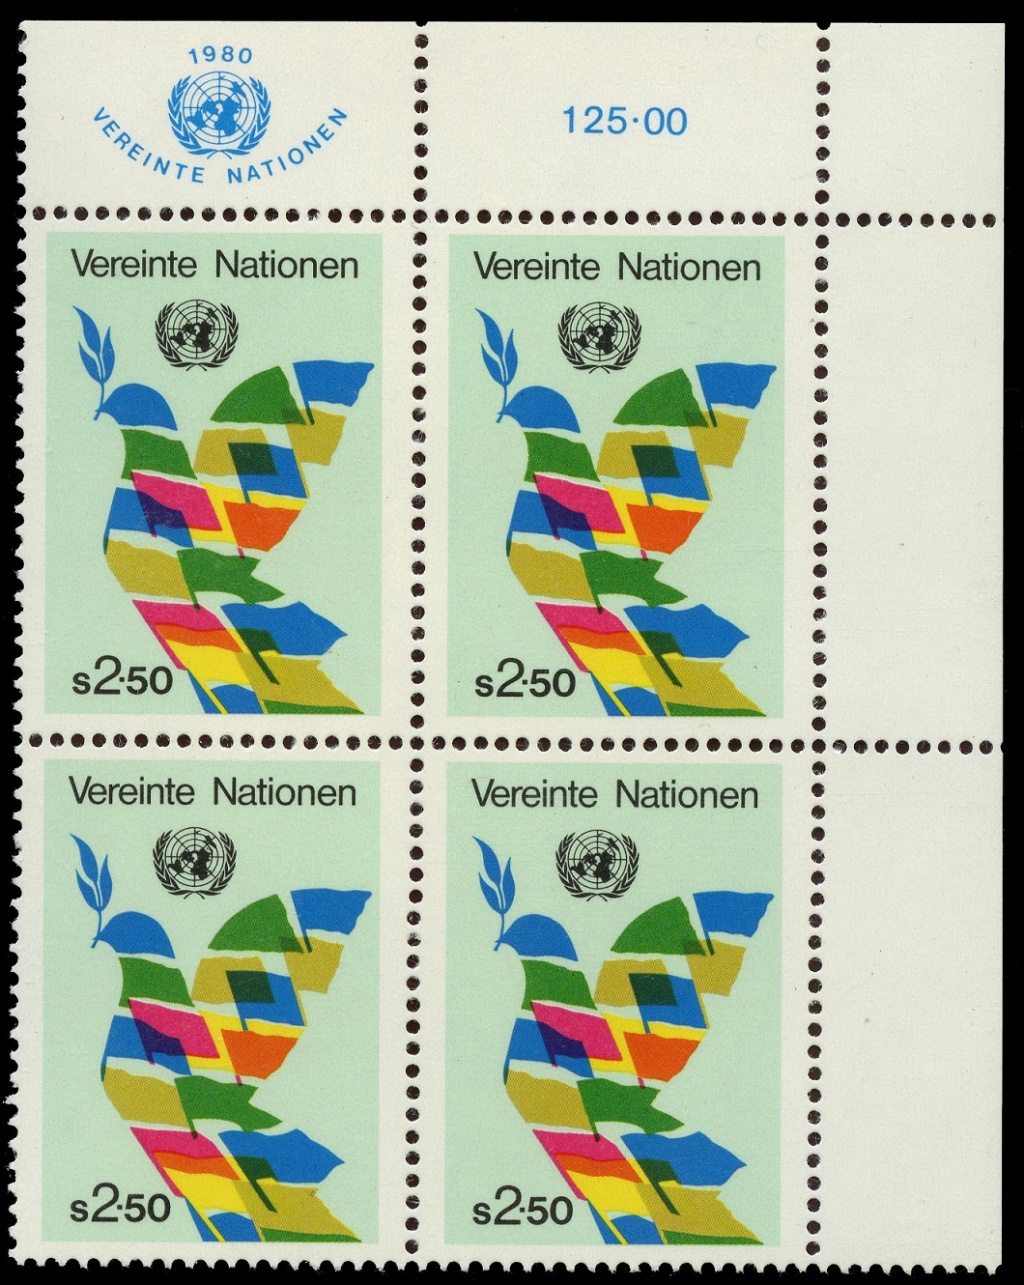 United Nations Organization (Wien) Unw-0017